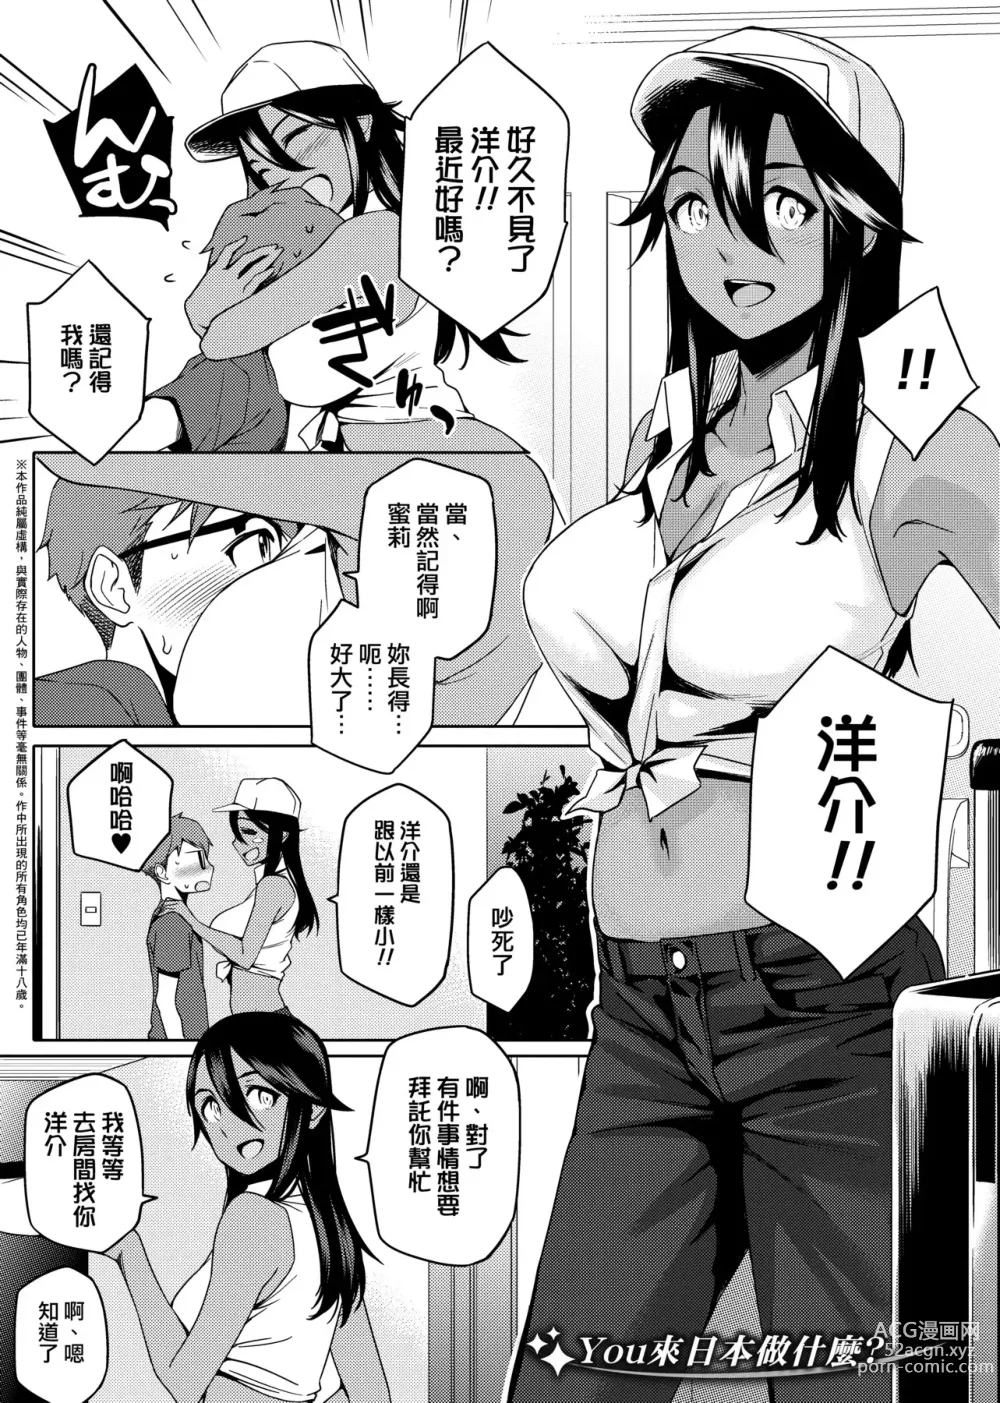 Page 8 of manga Natsu Koi Ota Girl - What Brings You to Japan?